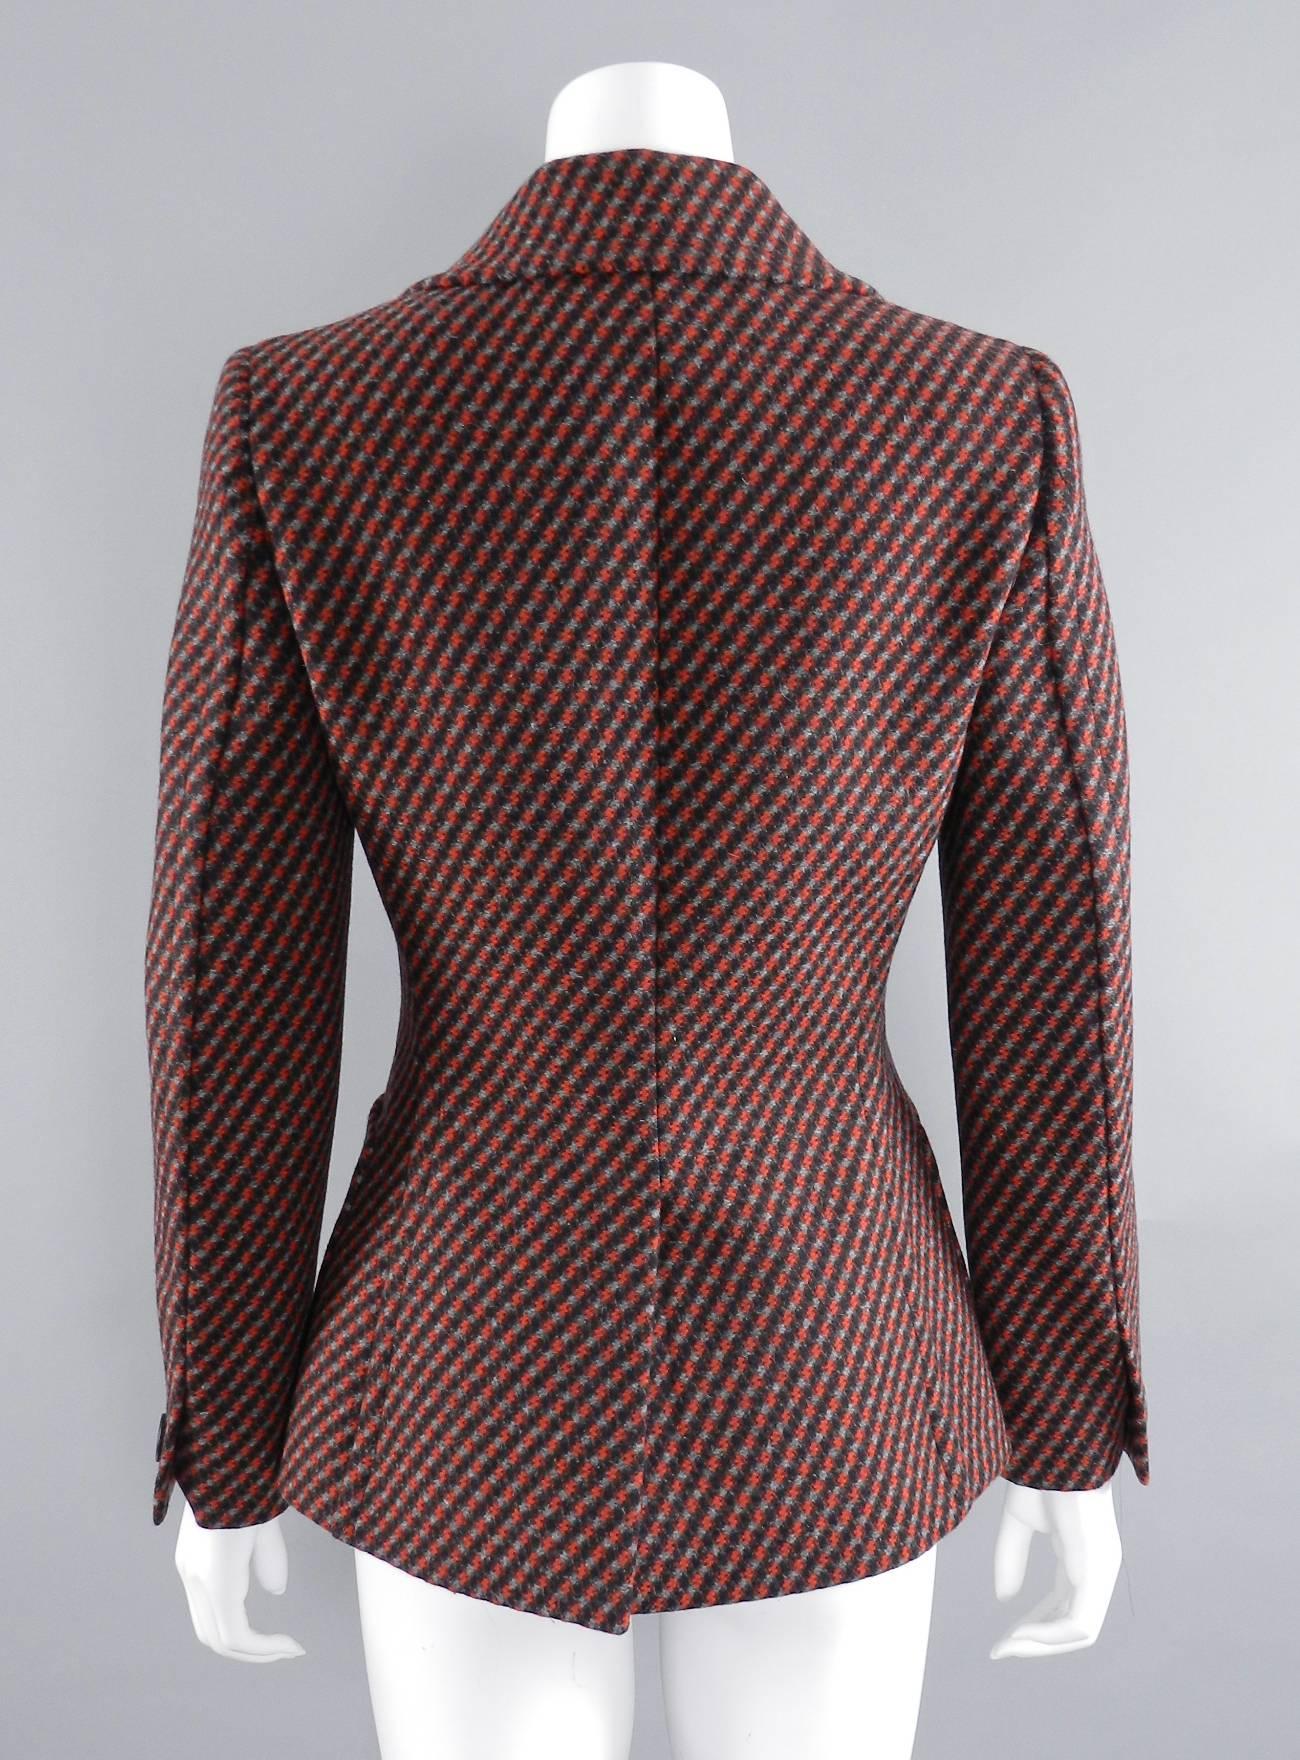 Women's PRADA fall 2014 red / grey / black Fitted Wool Blazer / Jacket